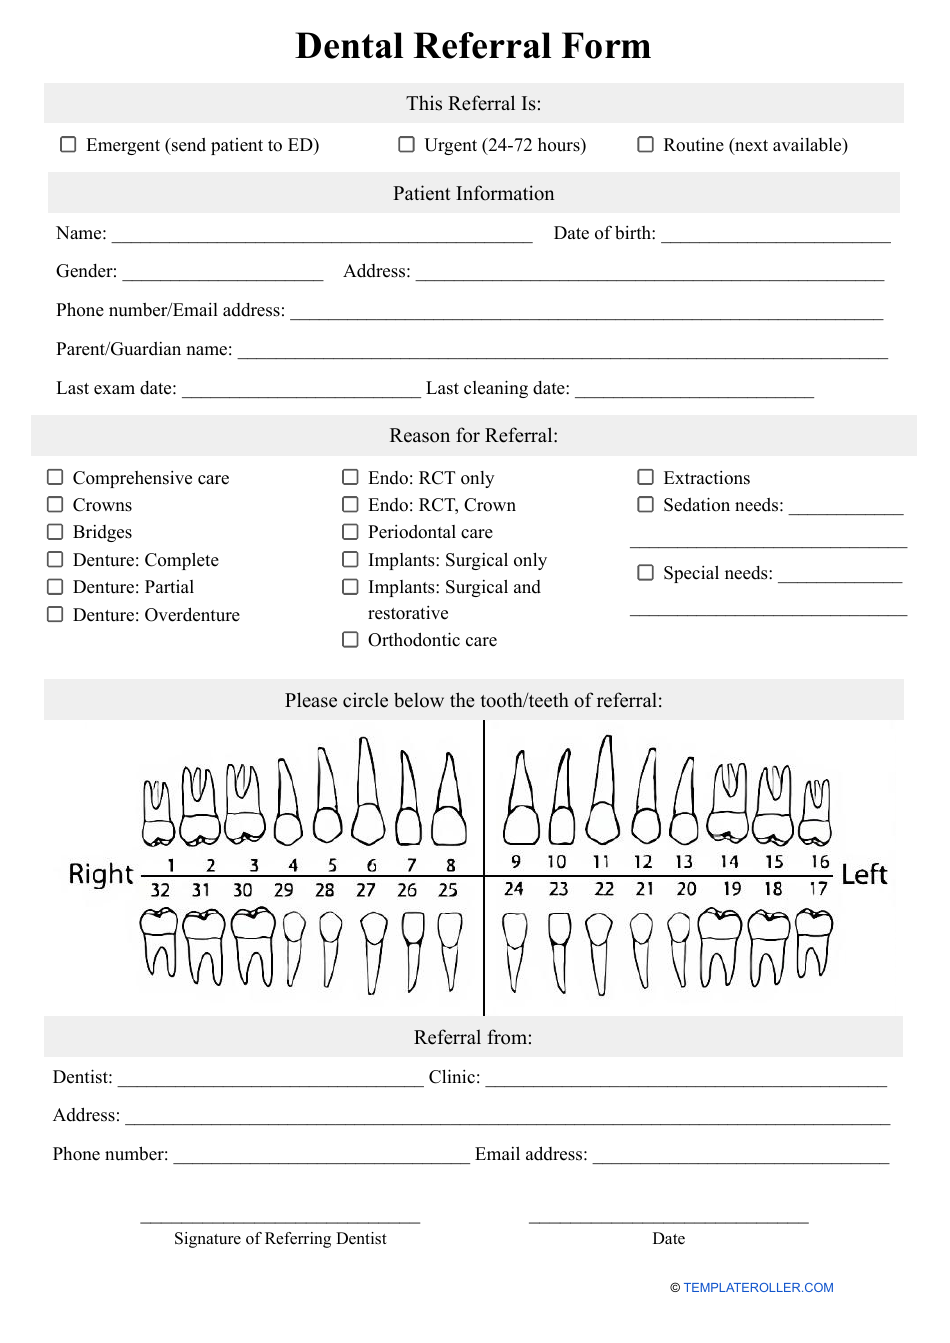 Dental Referral Form, Page 1